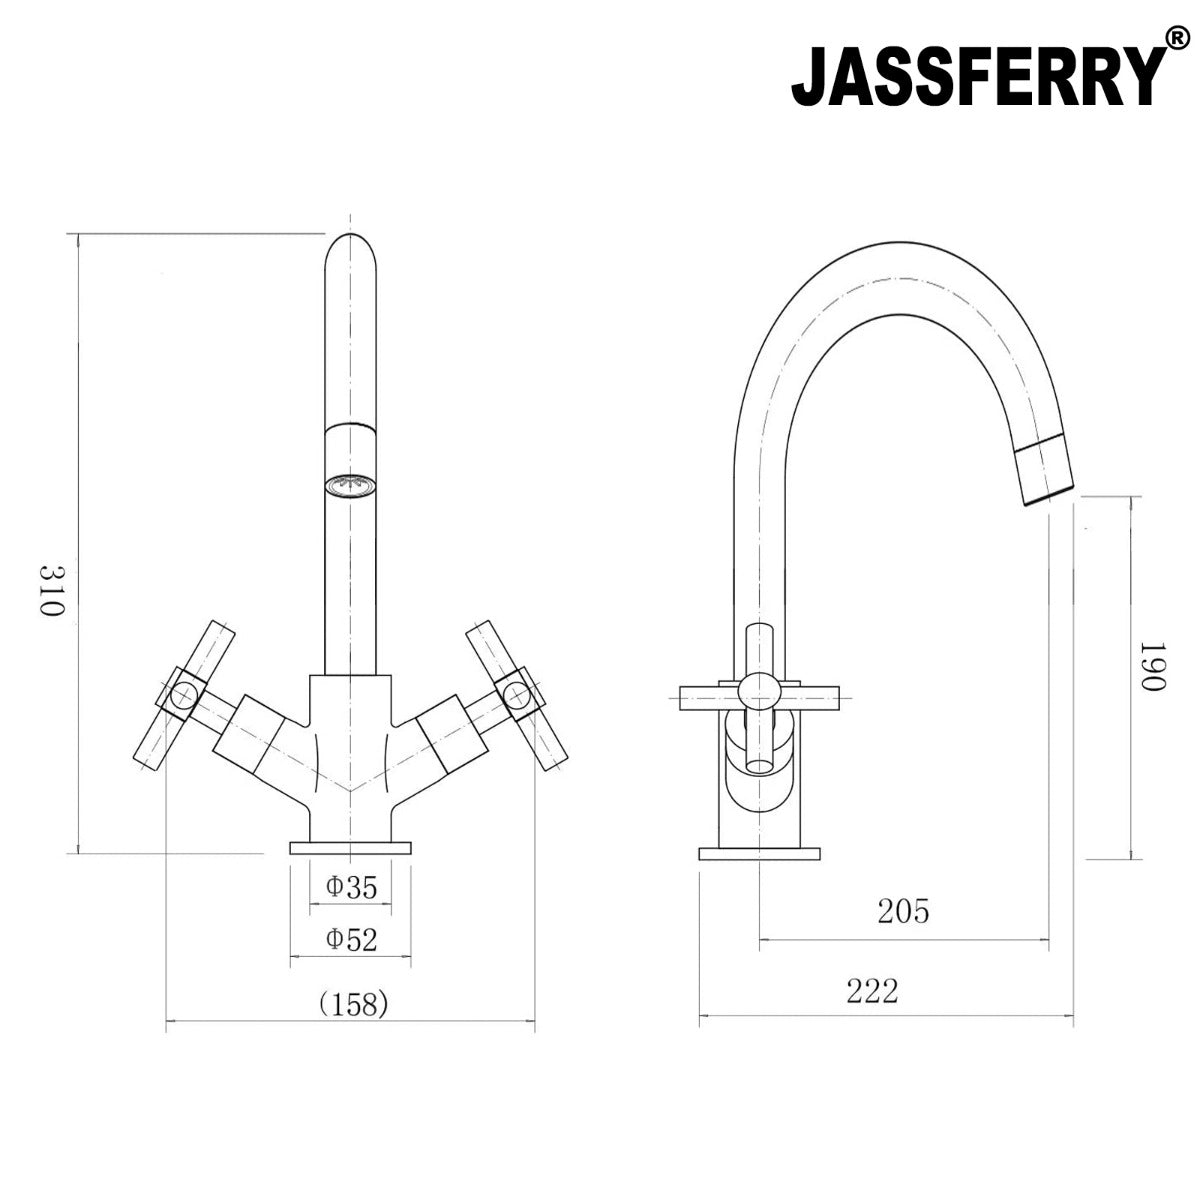 JassferryJASSFERRY Modern Kitchen Sink Basin Mixer Tap with Swivel Spout Cross HandleKitchen taps